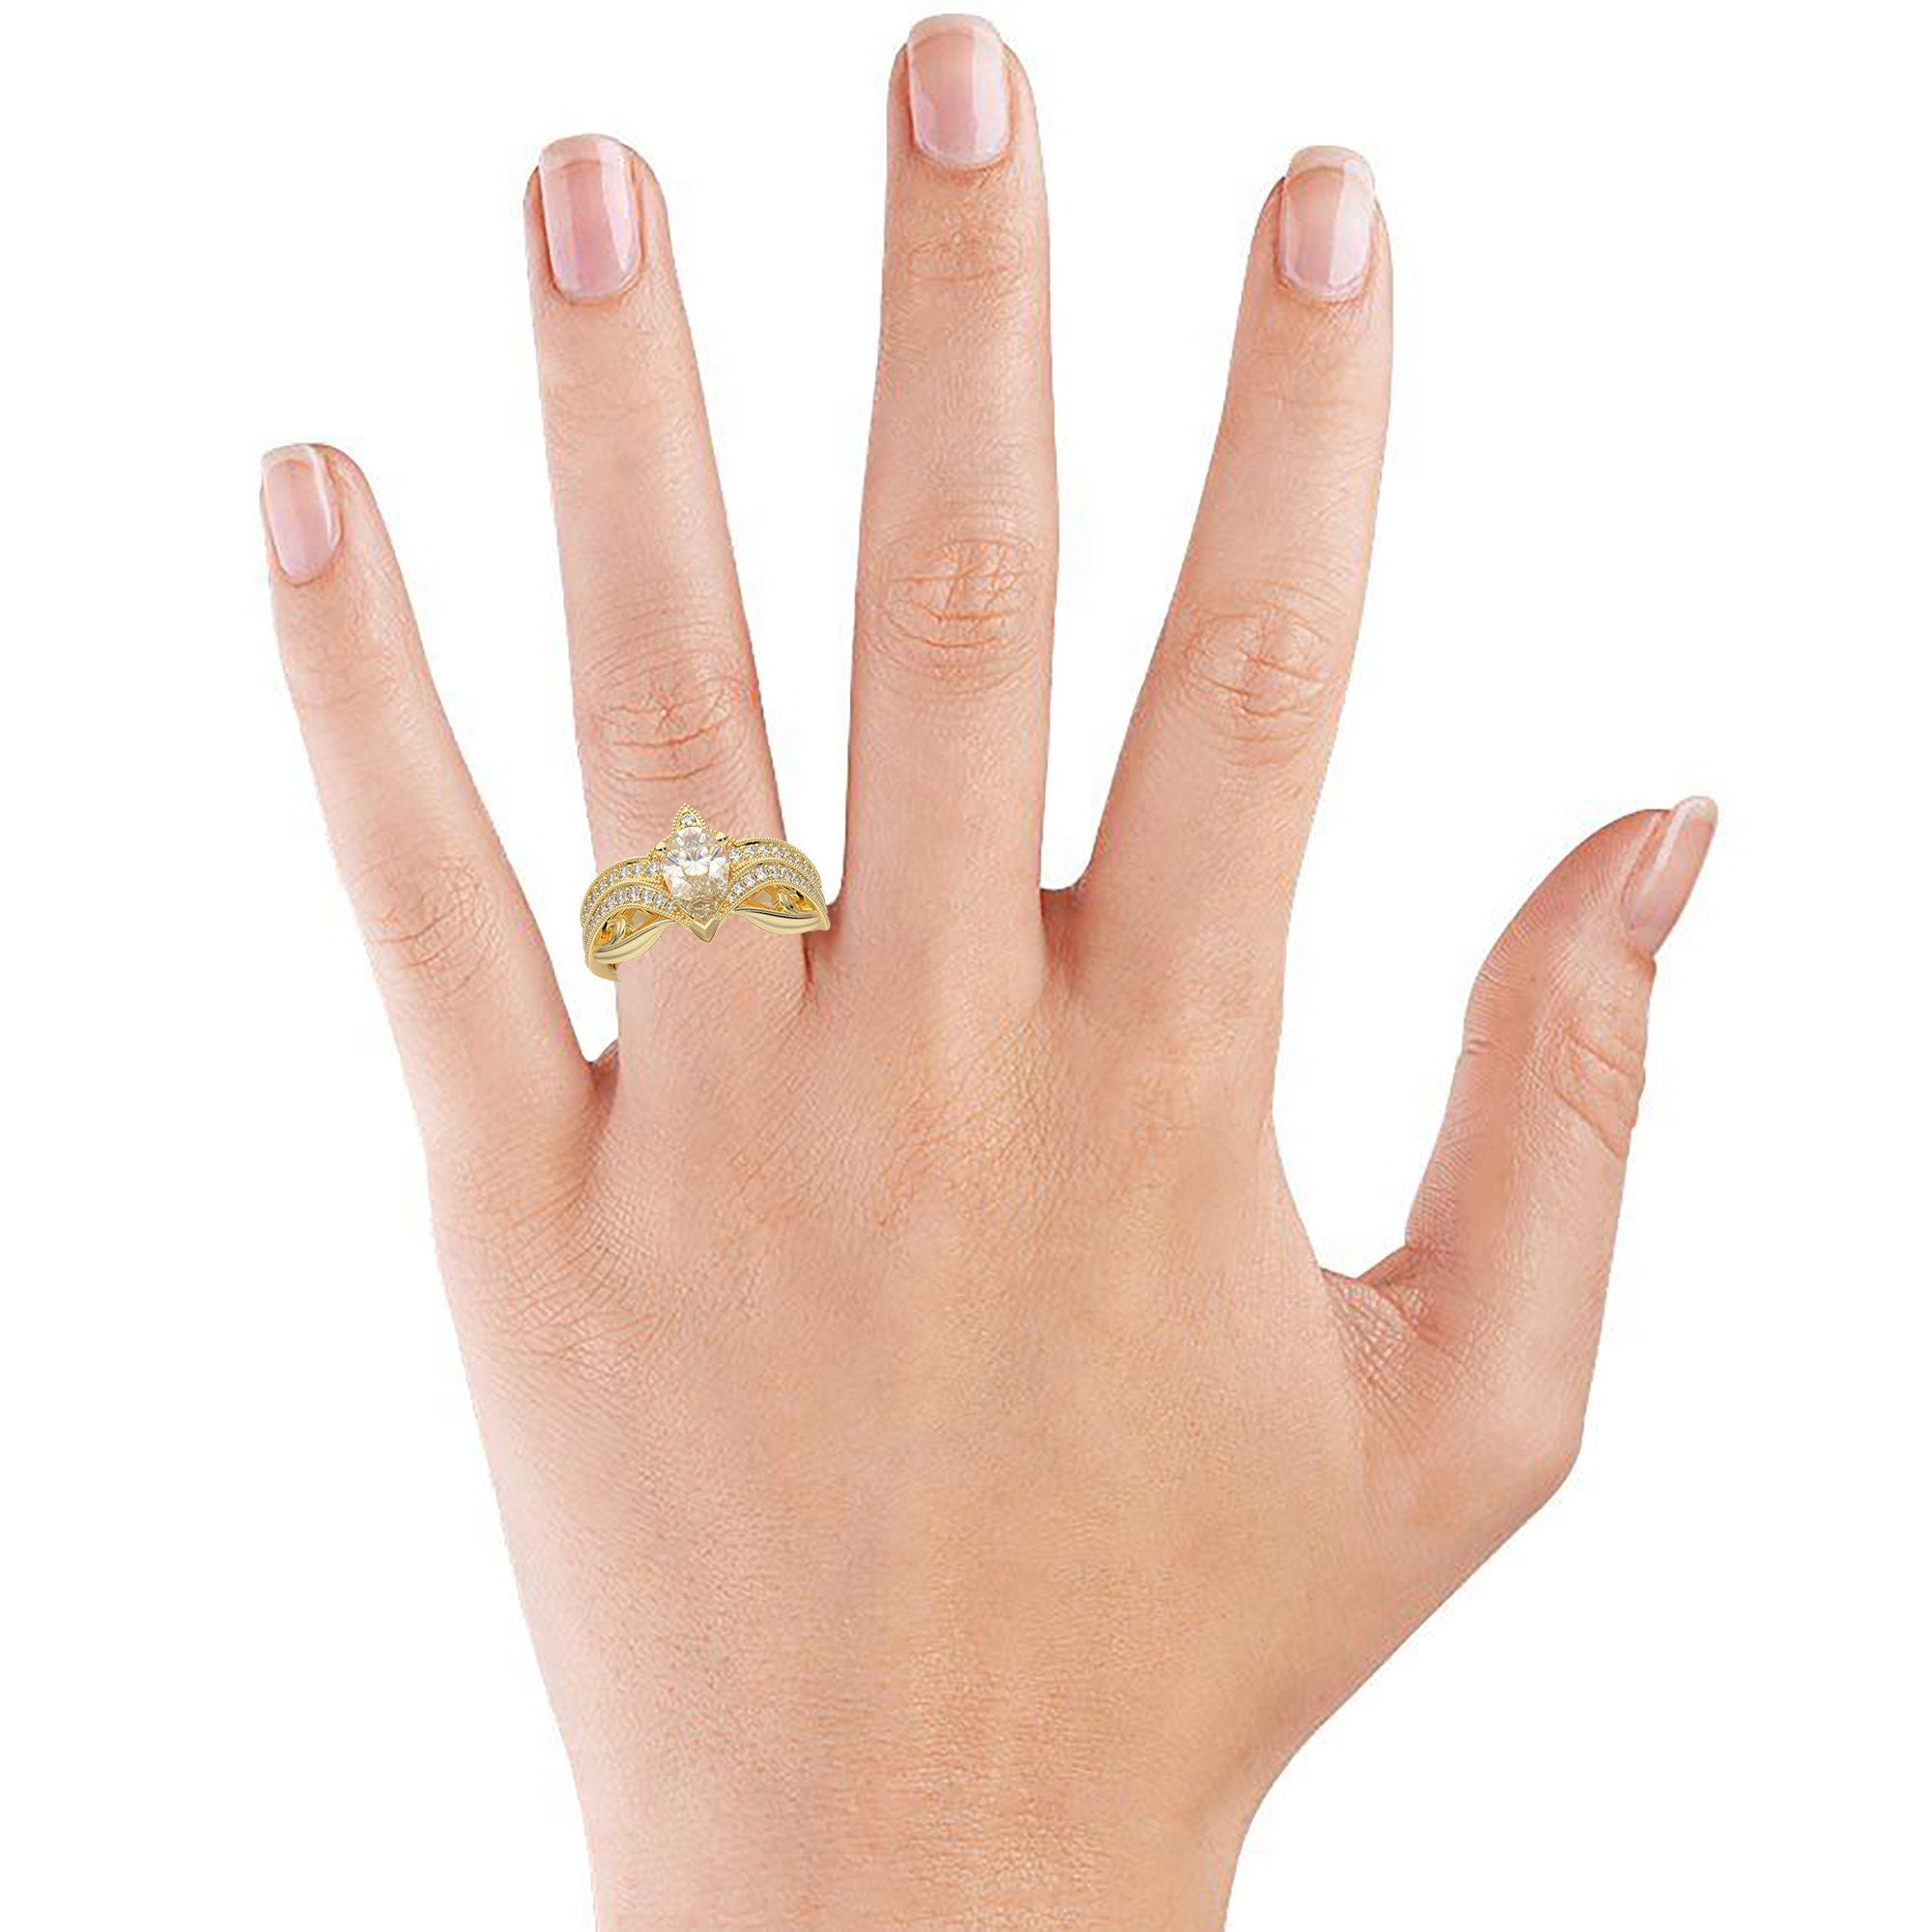 22K Bridal Wear Gold Ring, 3.8g at Rs 22800 in New Delhi | ID: 2852522480612